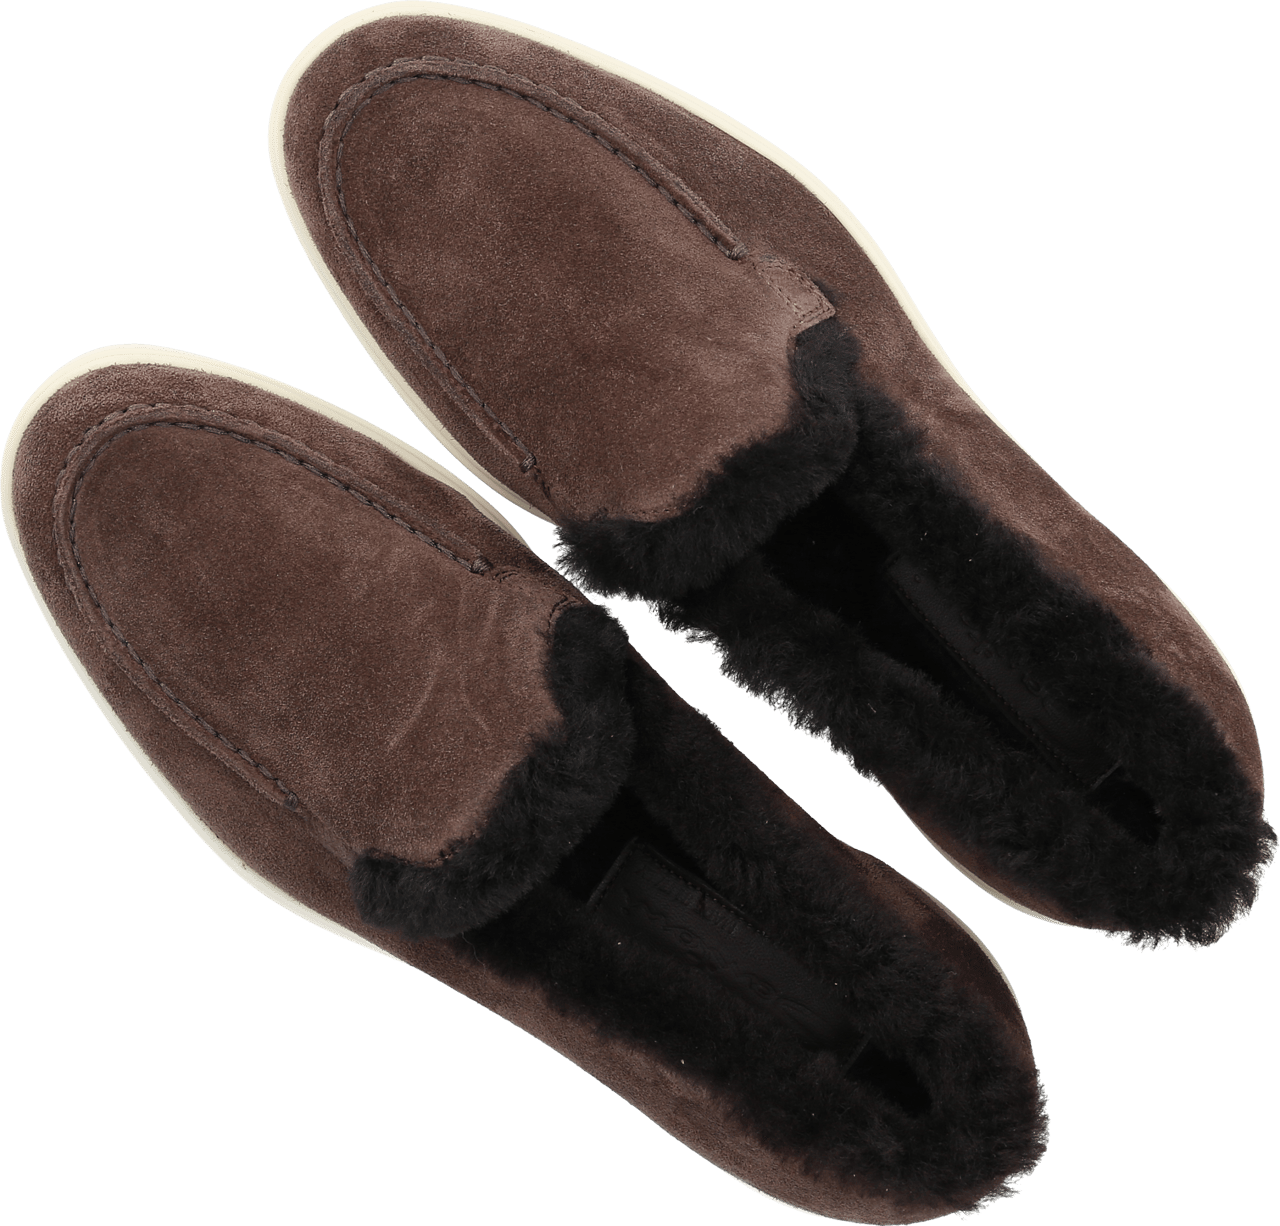 Santoni Ankle Boots Suede Lavazza Bruin